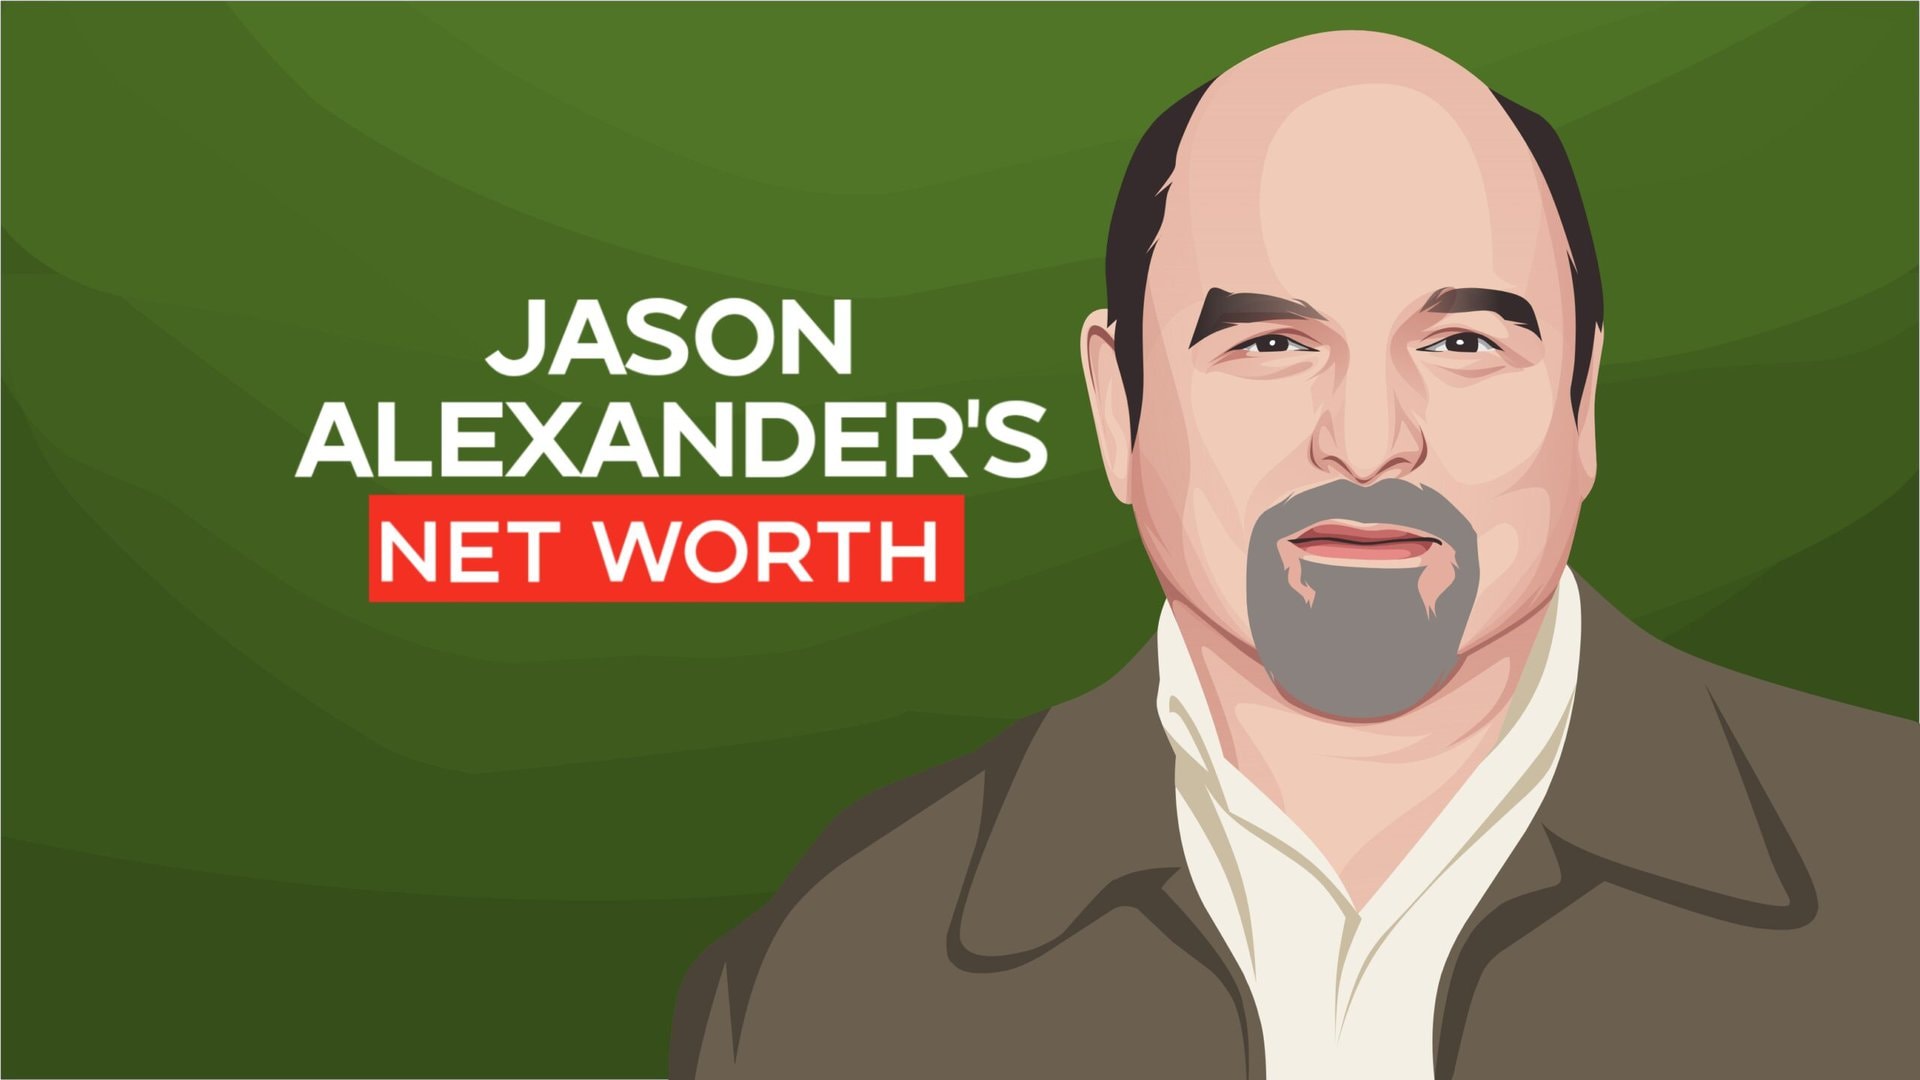 Jason Alexander's net worth